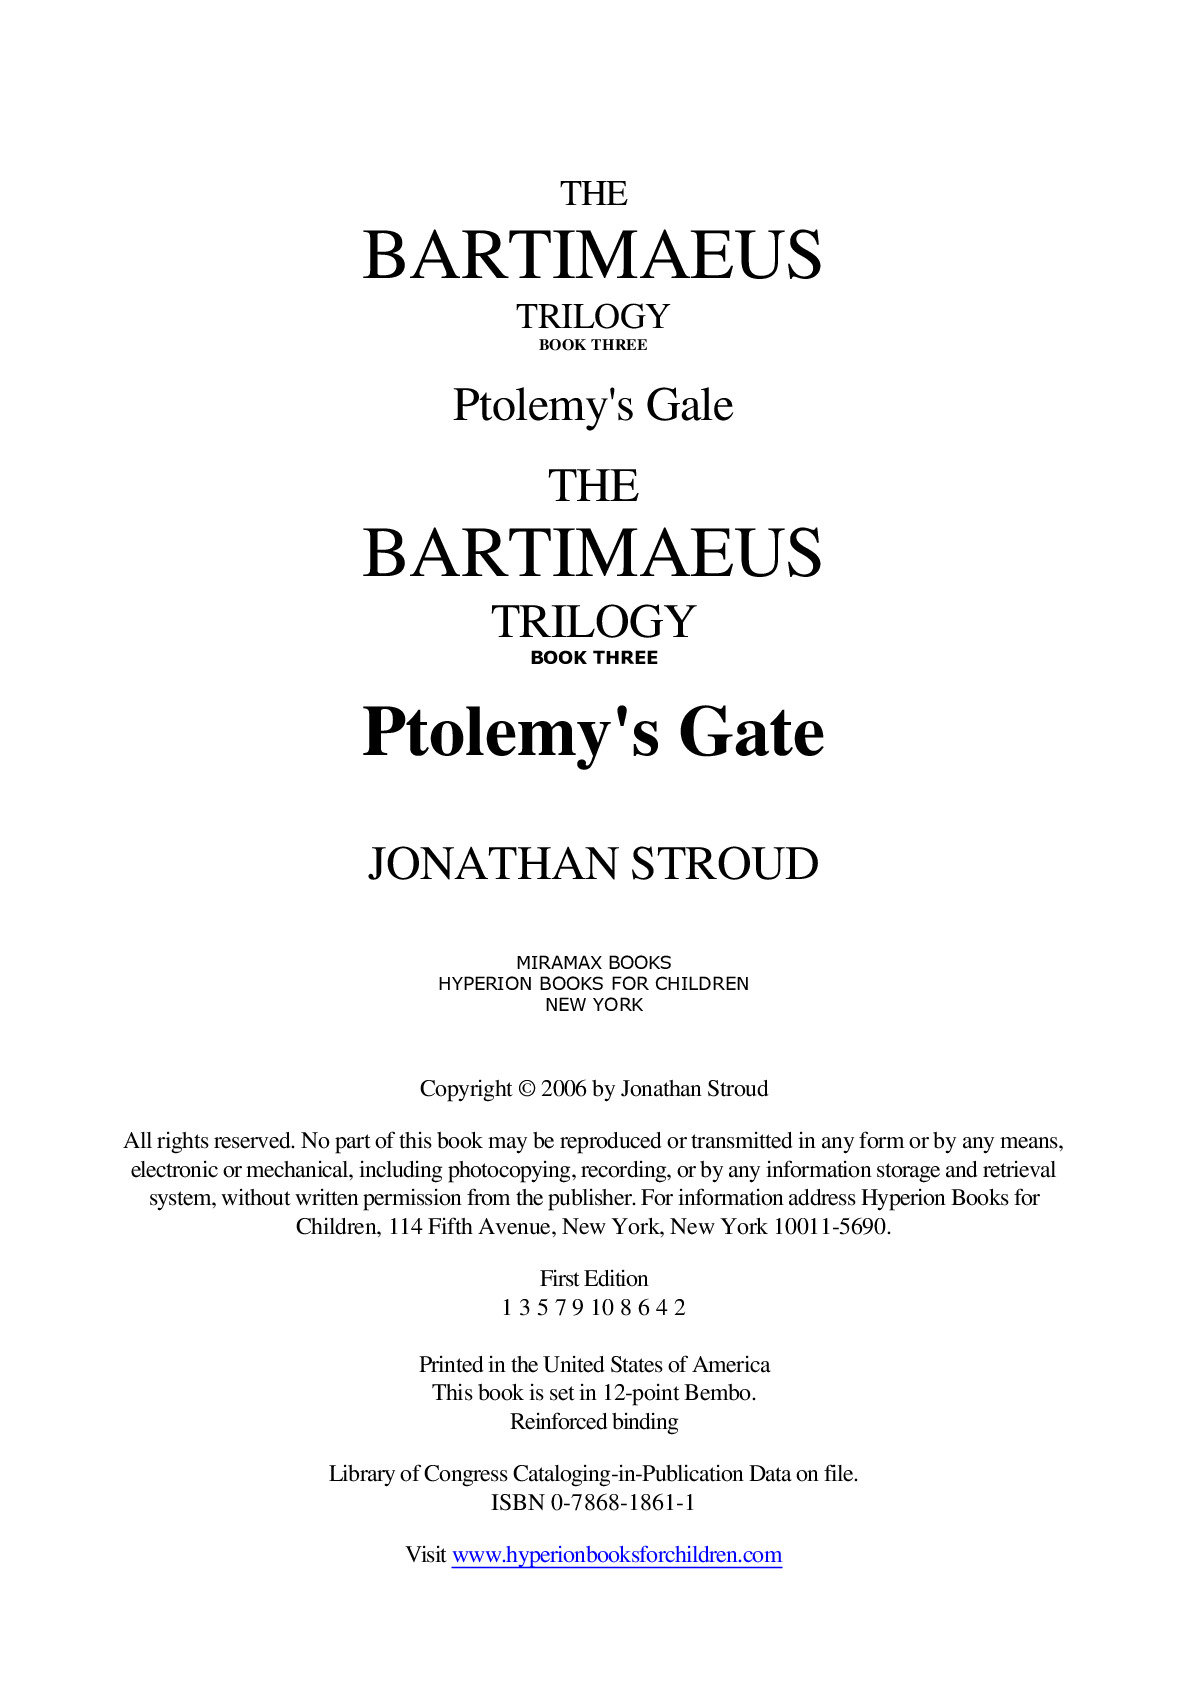 Jonathan Stroud – Bartimaeus 3 – Ptolemy’s Gate